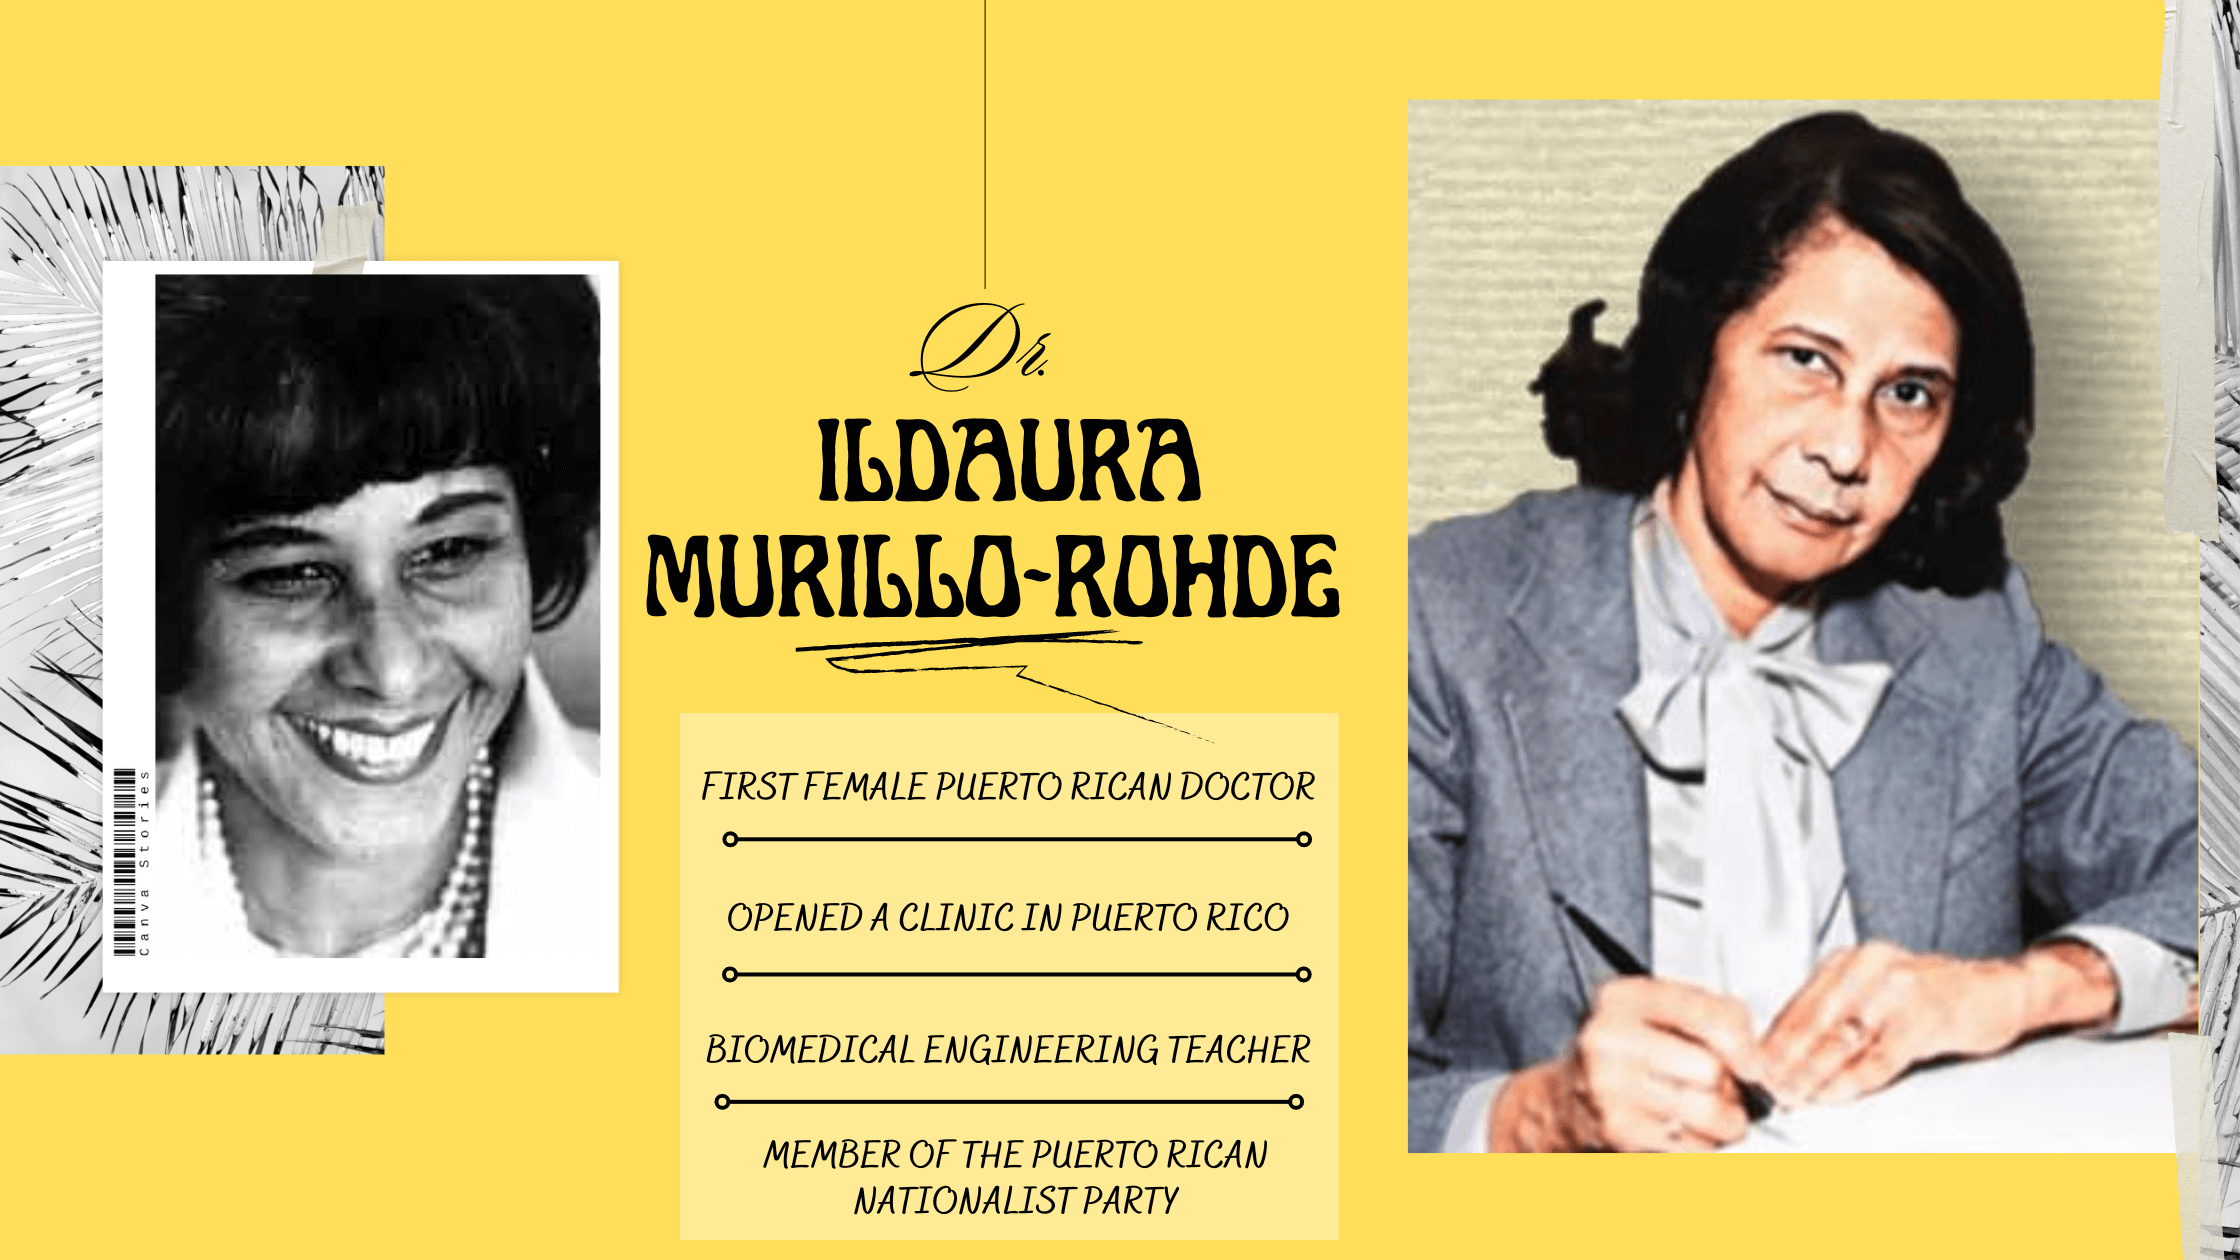 Who Was Dr. Ildaura Murillo-Rohde?